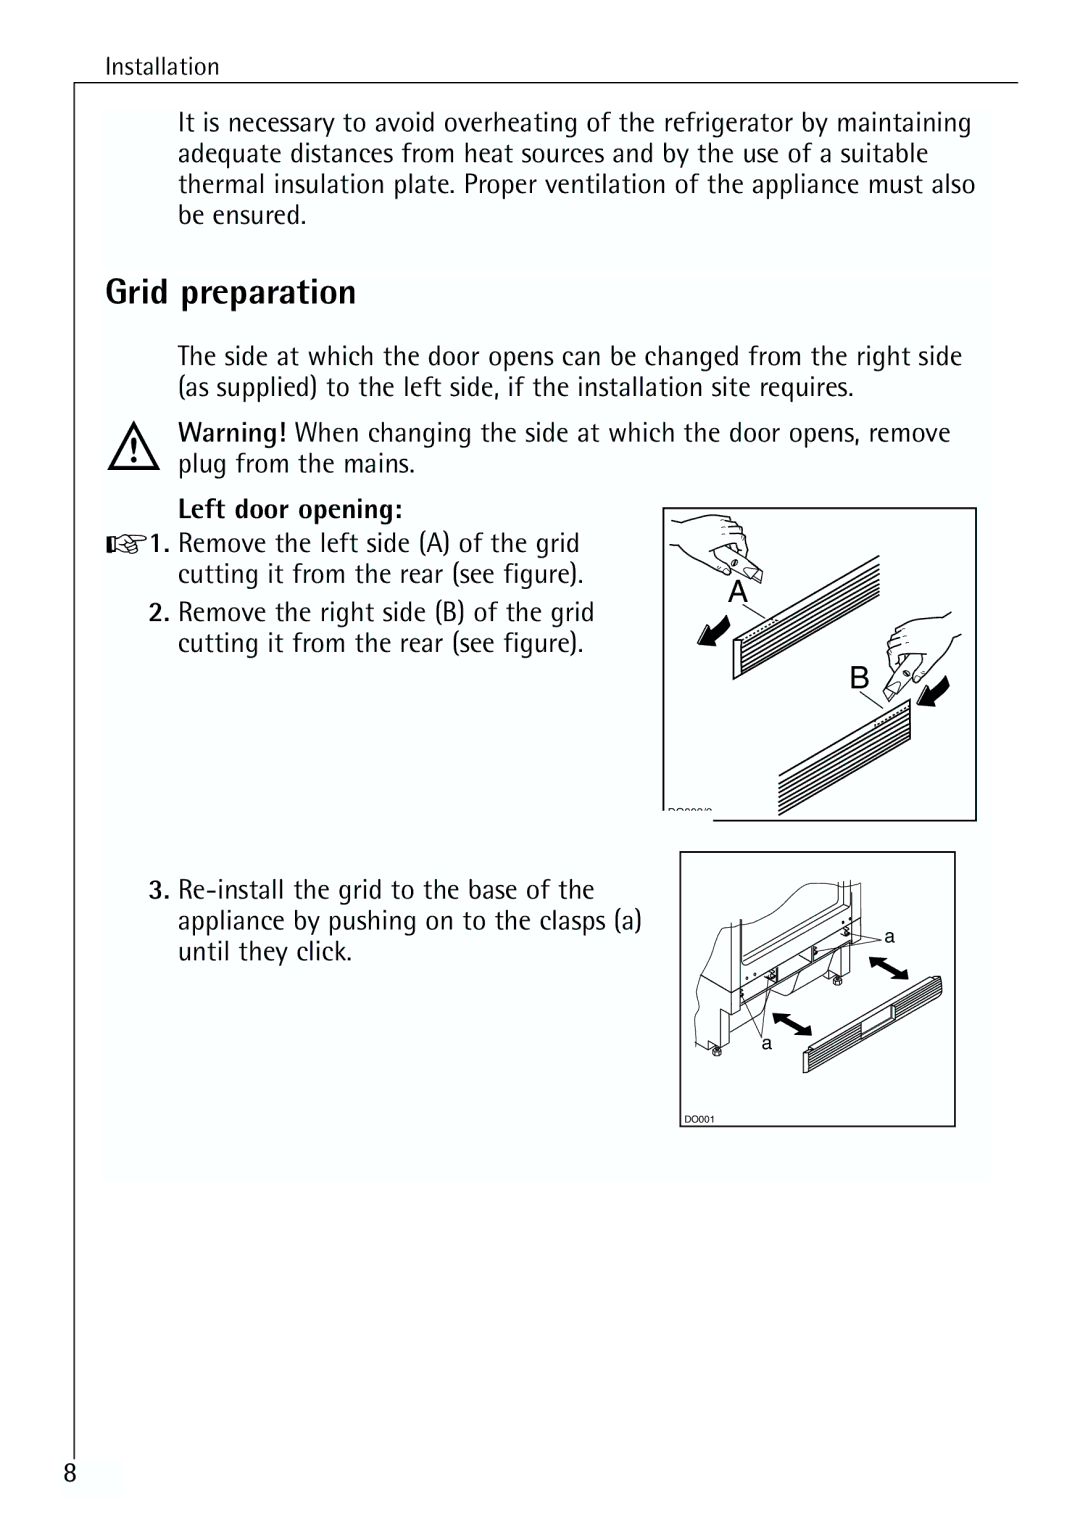 Electrolux U 96040-4 i installation instructions Grid preparation, Left door opening 